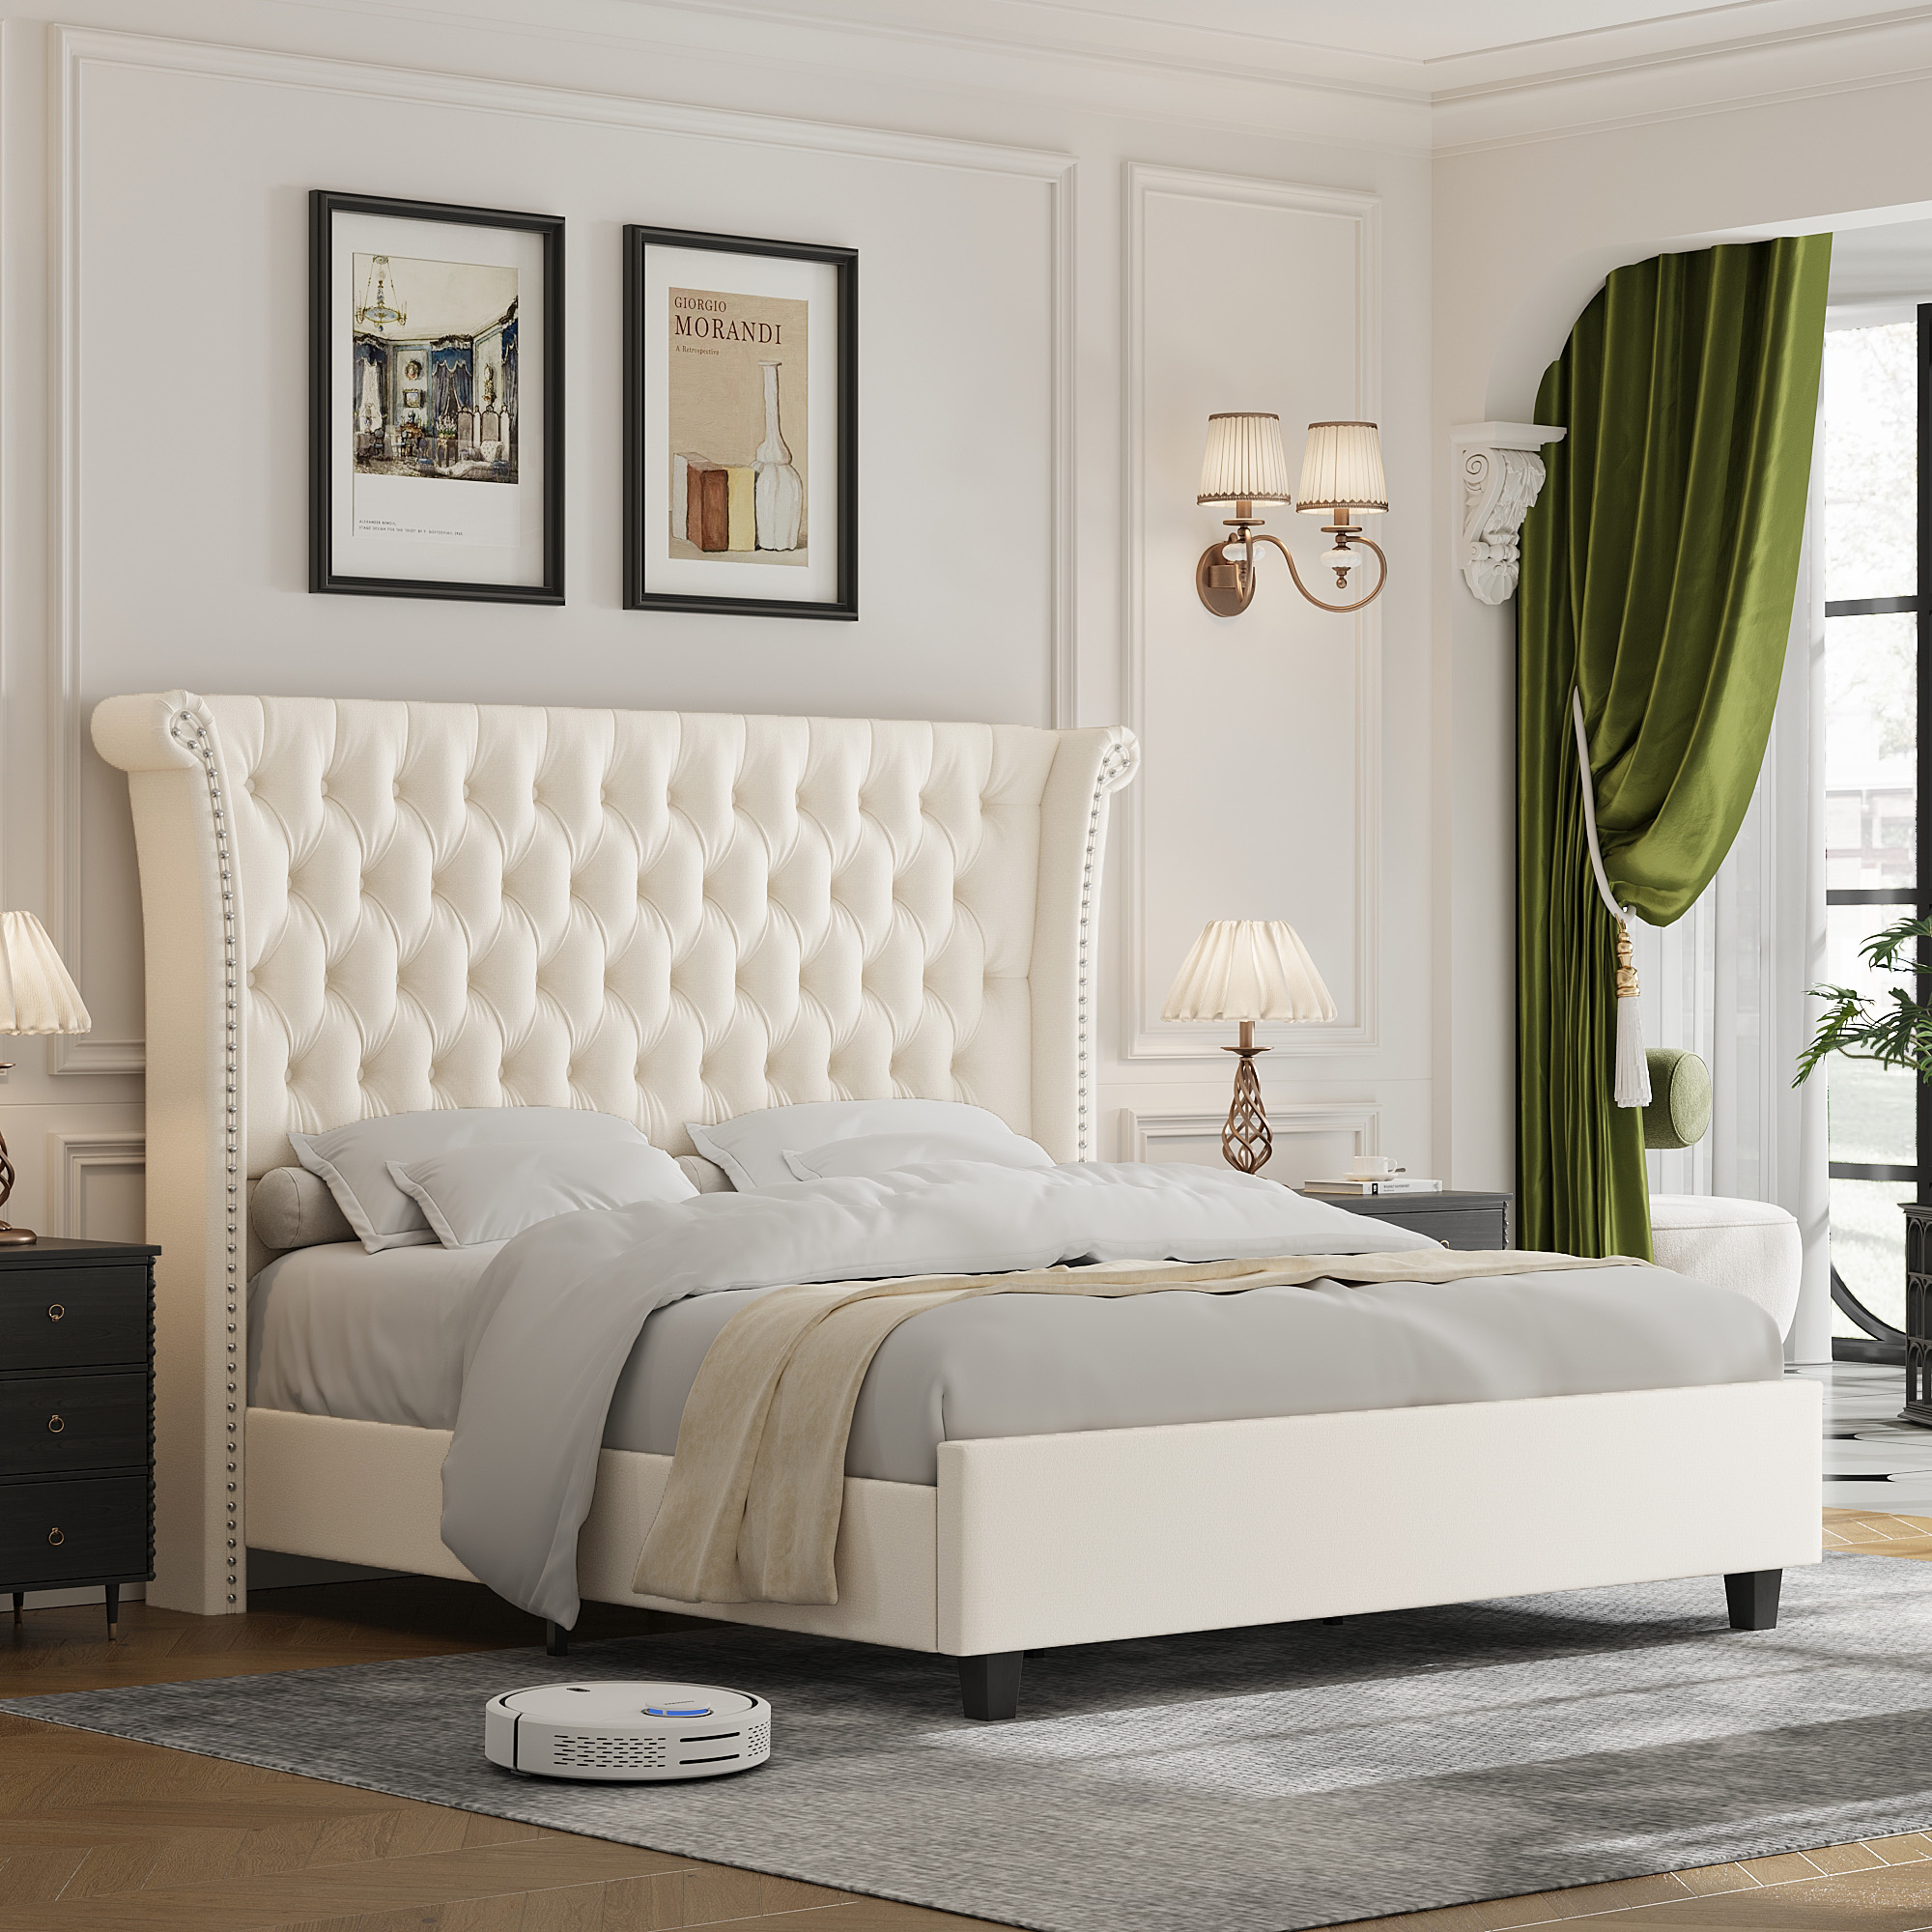 Homfa King Size Bed Frame, Modern Velvet Tufted Upholstered Platform Bed with Rivet Rolled Edge High Wingback Headboard, White - image 2 of 7